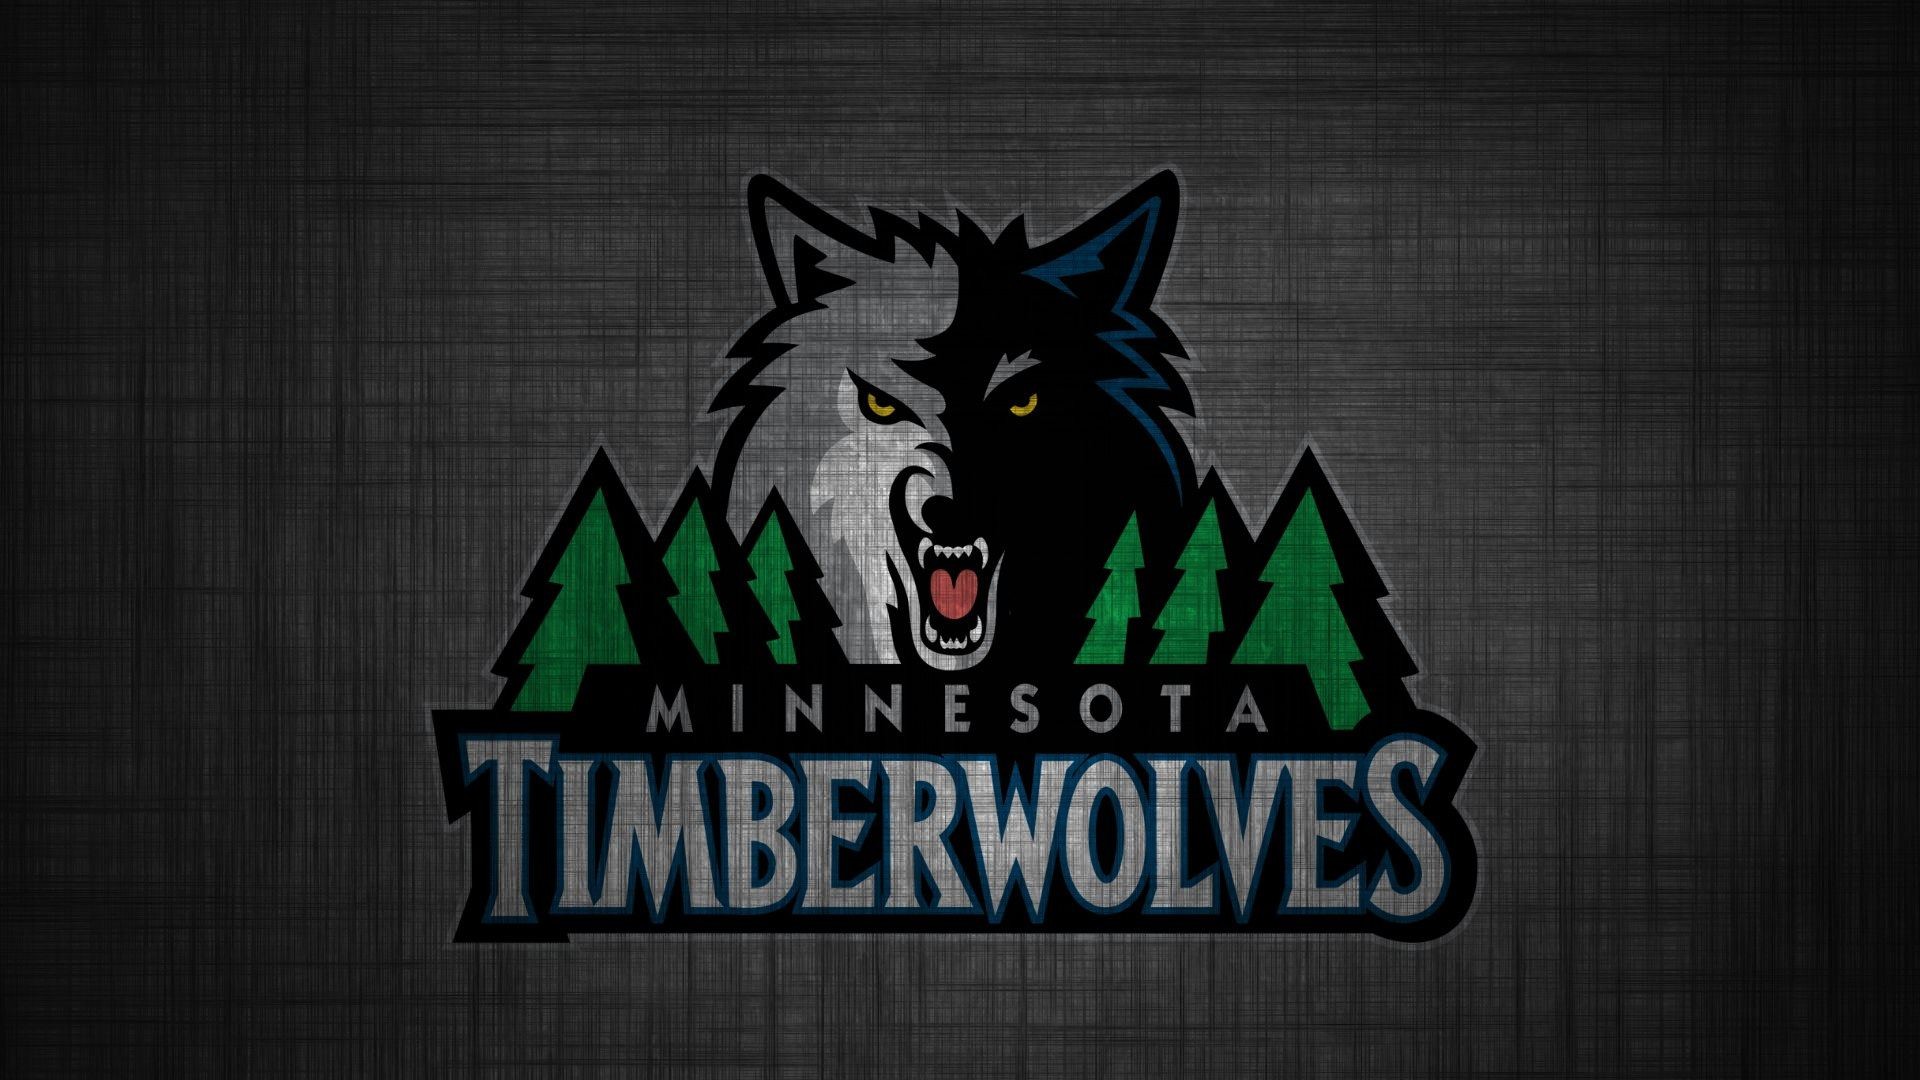 Wallpaper wallpaper sport logo basketball NBA glitter checkered Minnesota  Timberwolves images for desktop section спорт  download